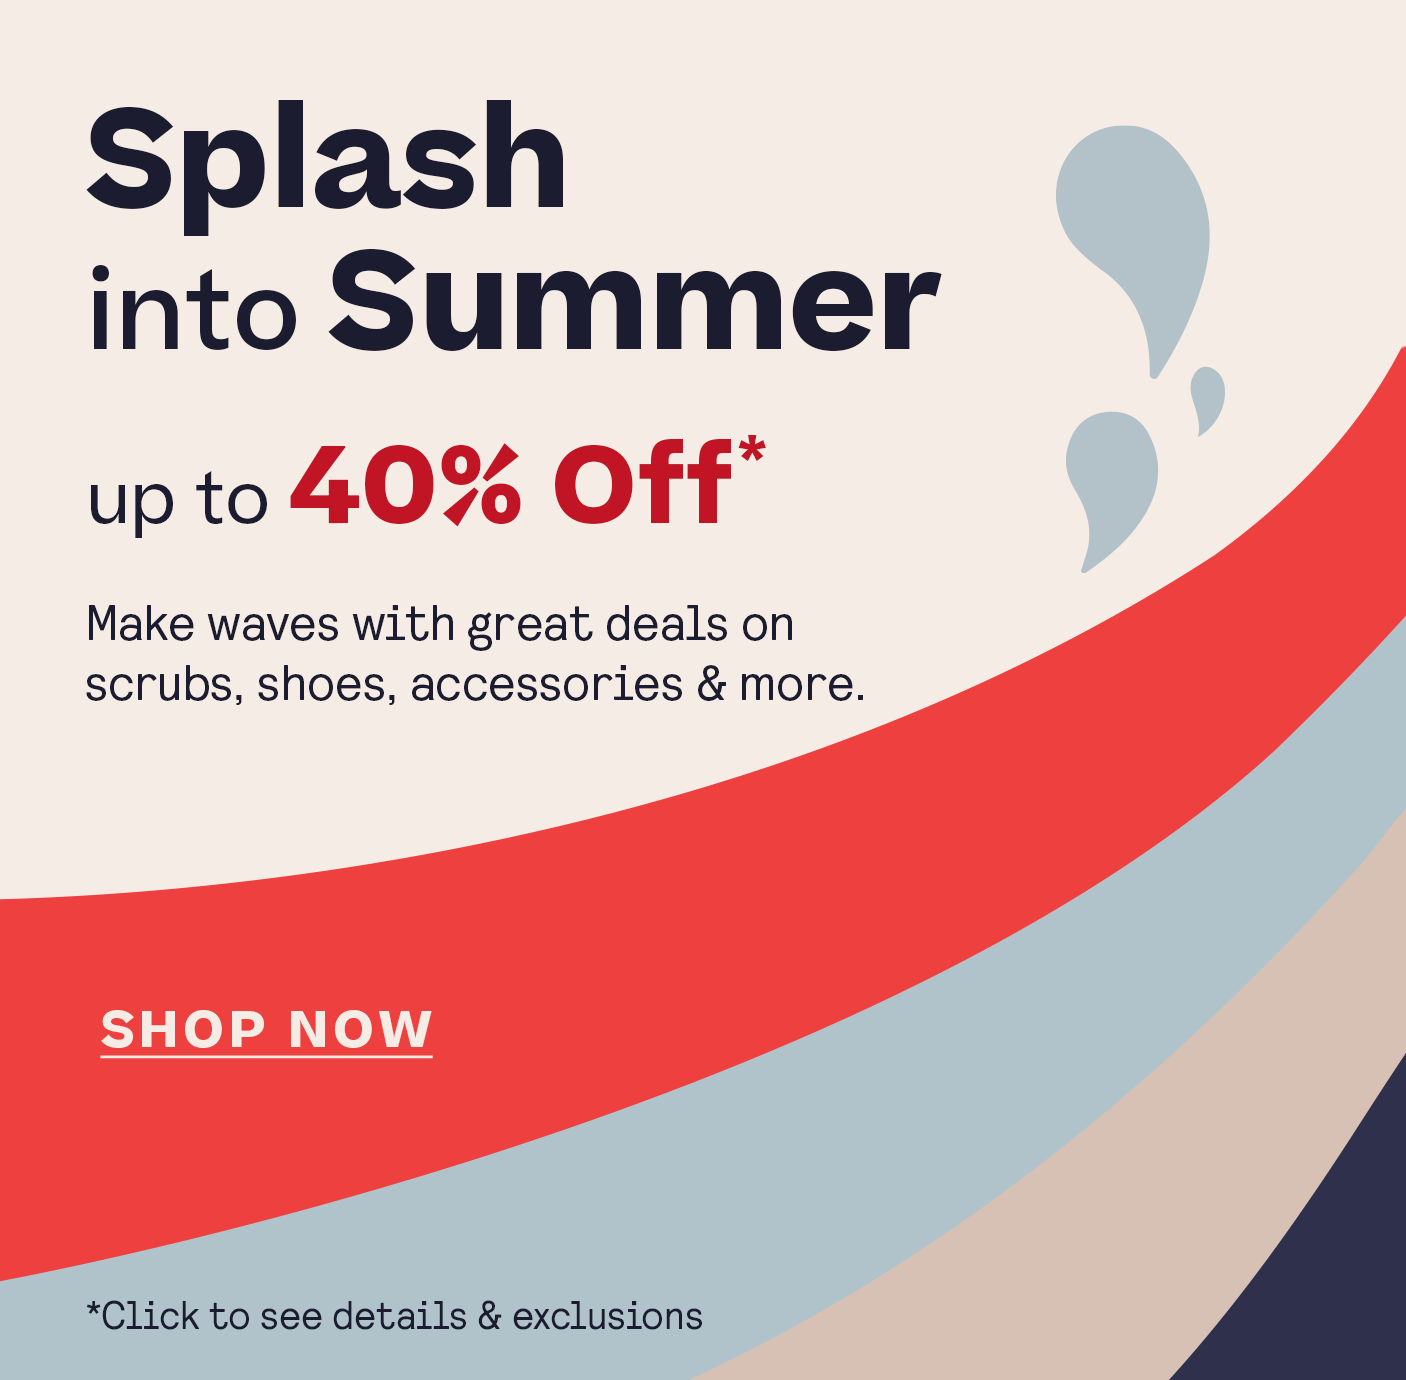 Splash Into Summer Up to 40% Off* click for details